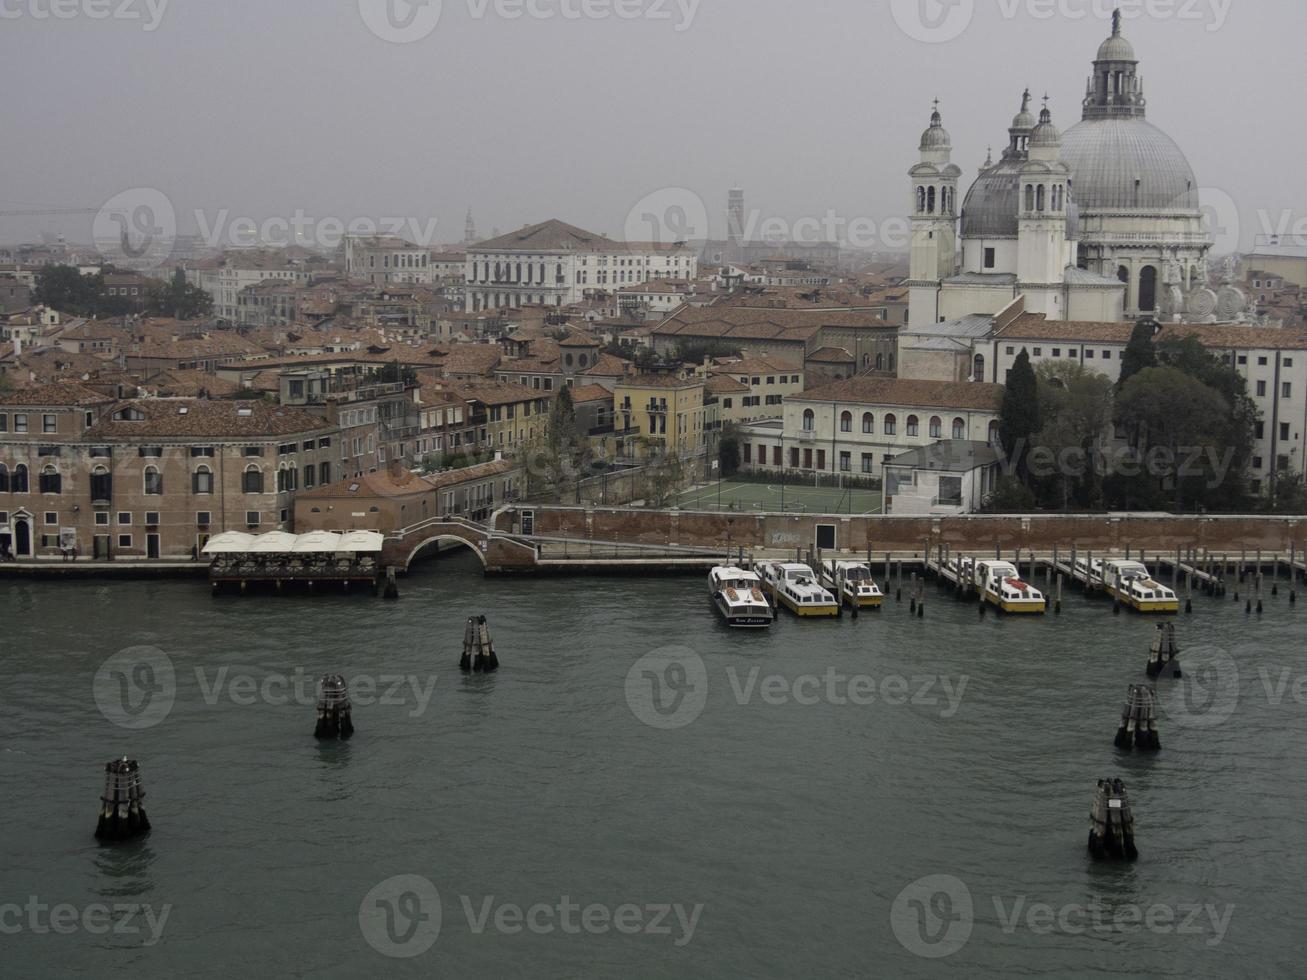 Venedig in Italien foto